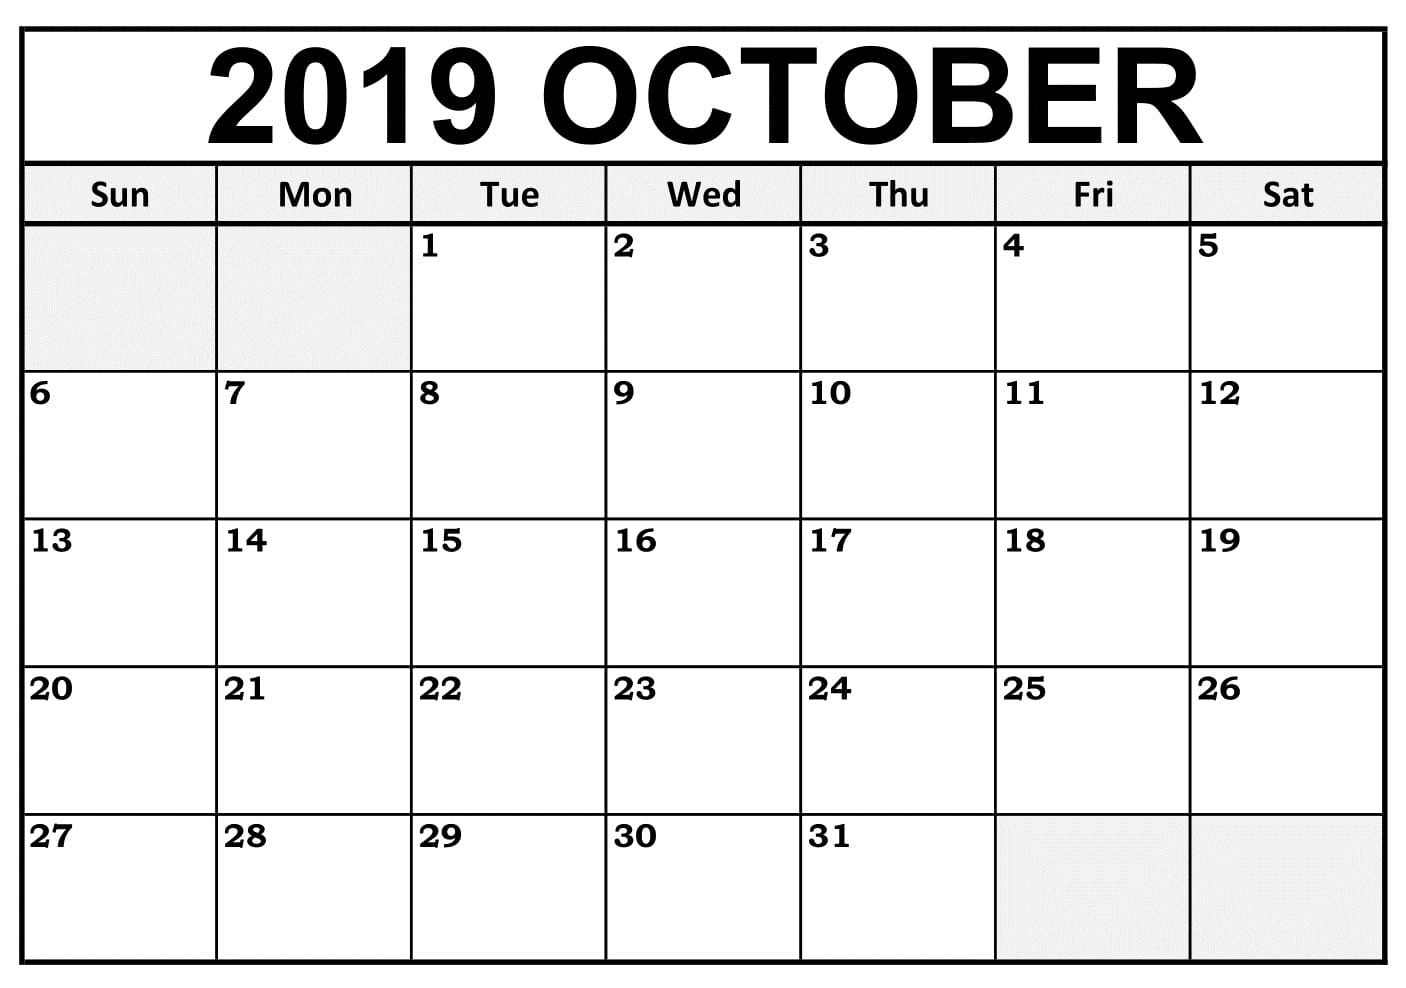 October 2019 Calendar Template For Kids | Free Printable Intended For Blank Calendar Template For Kids